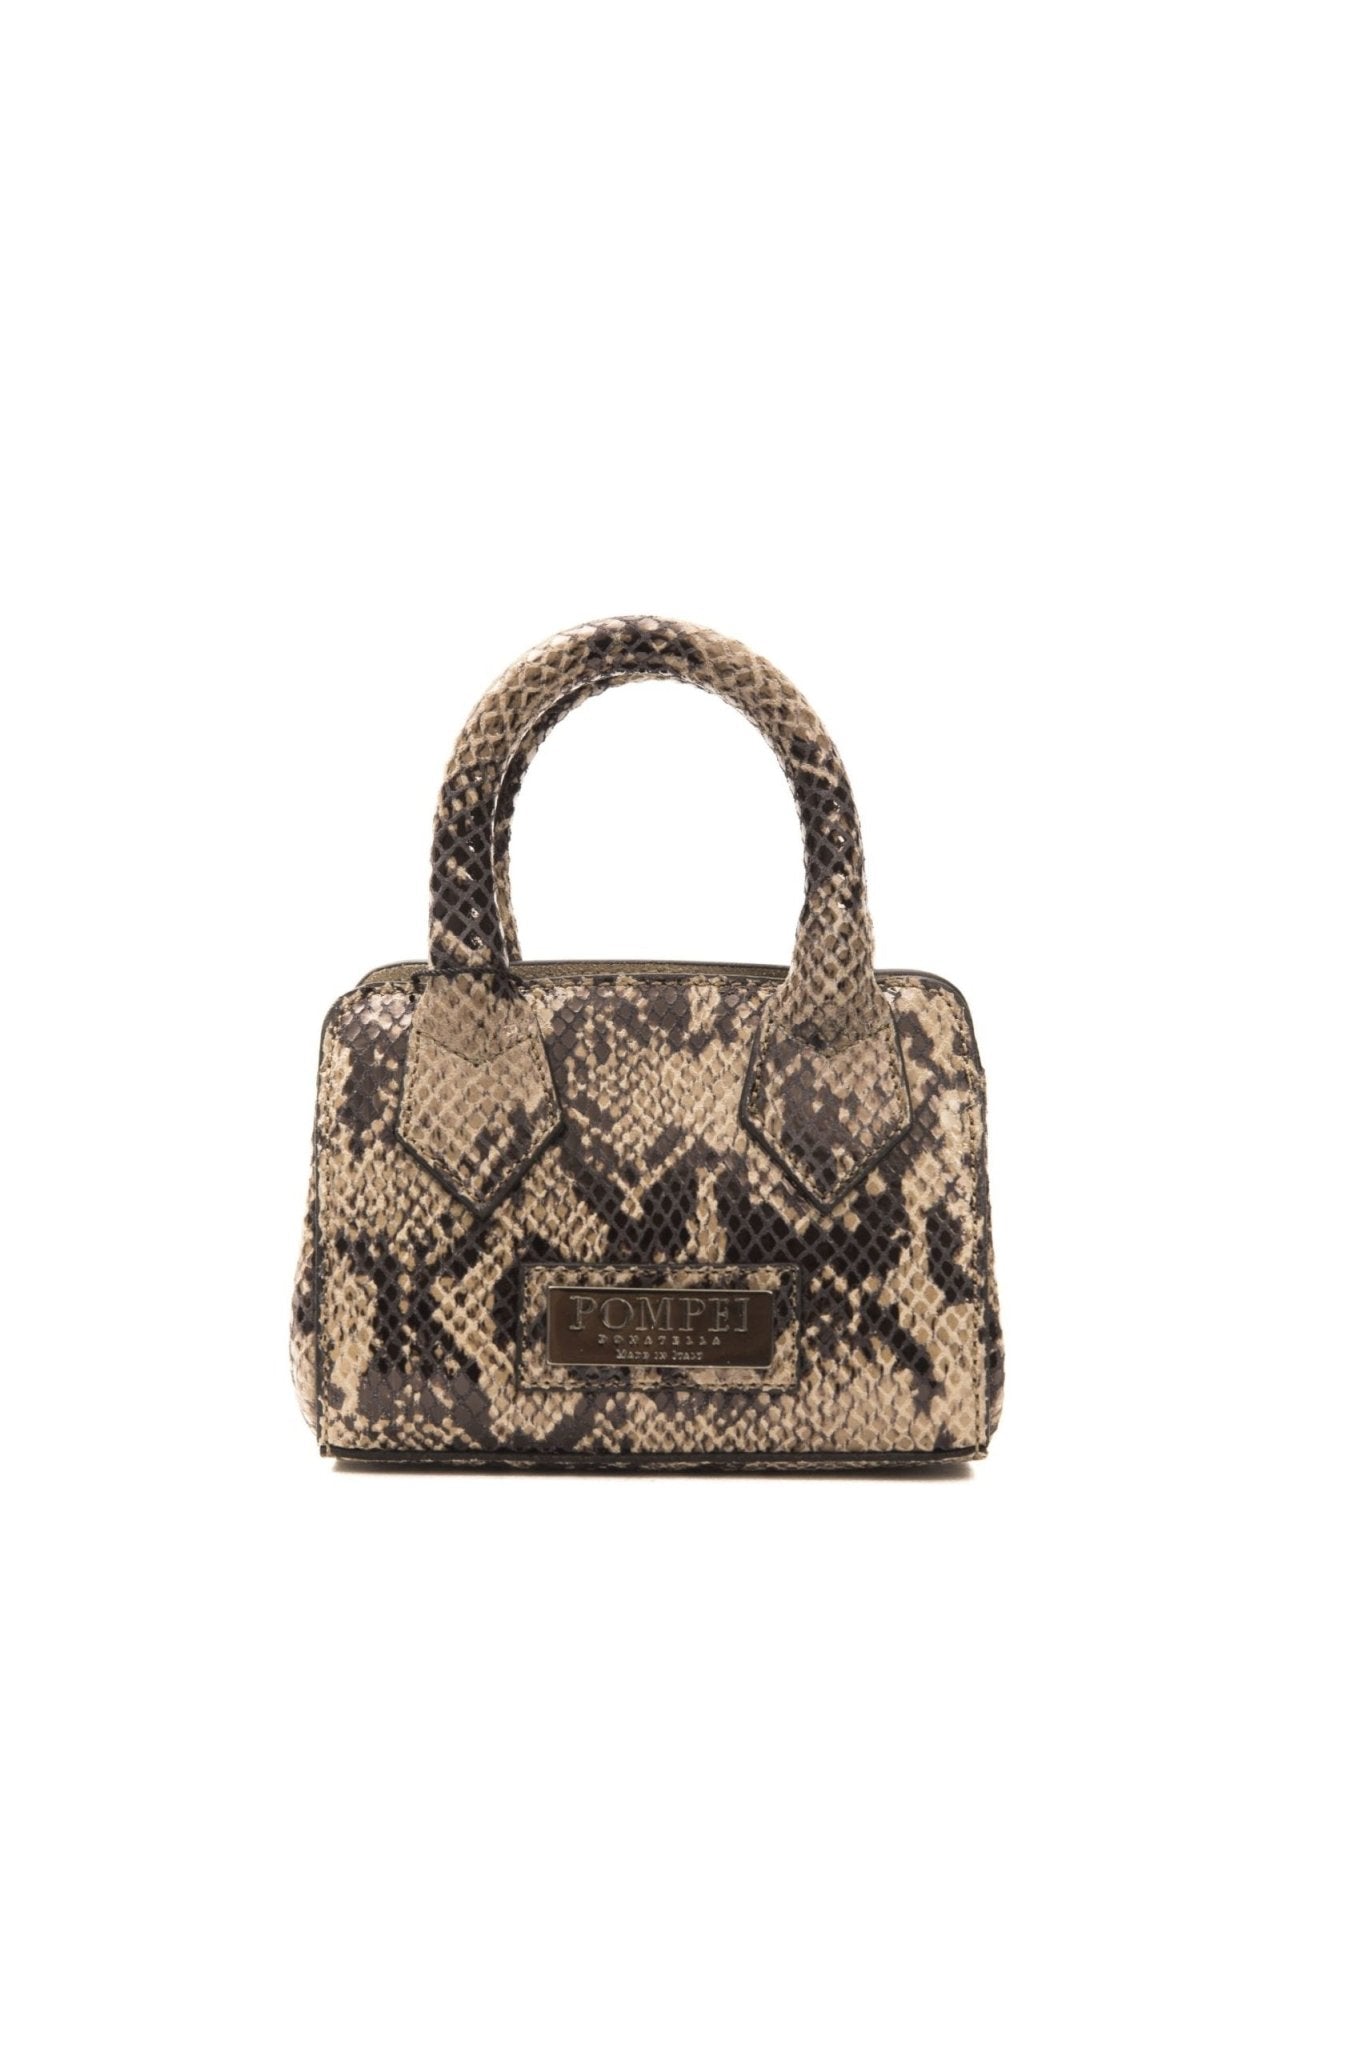 Pompei Donatella Brown Leather Handbag - Fizigo